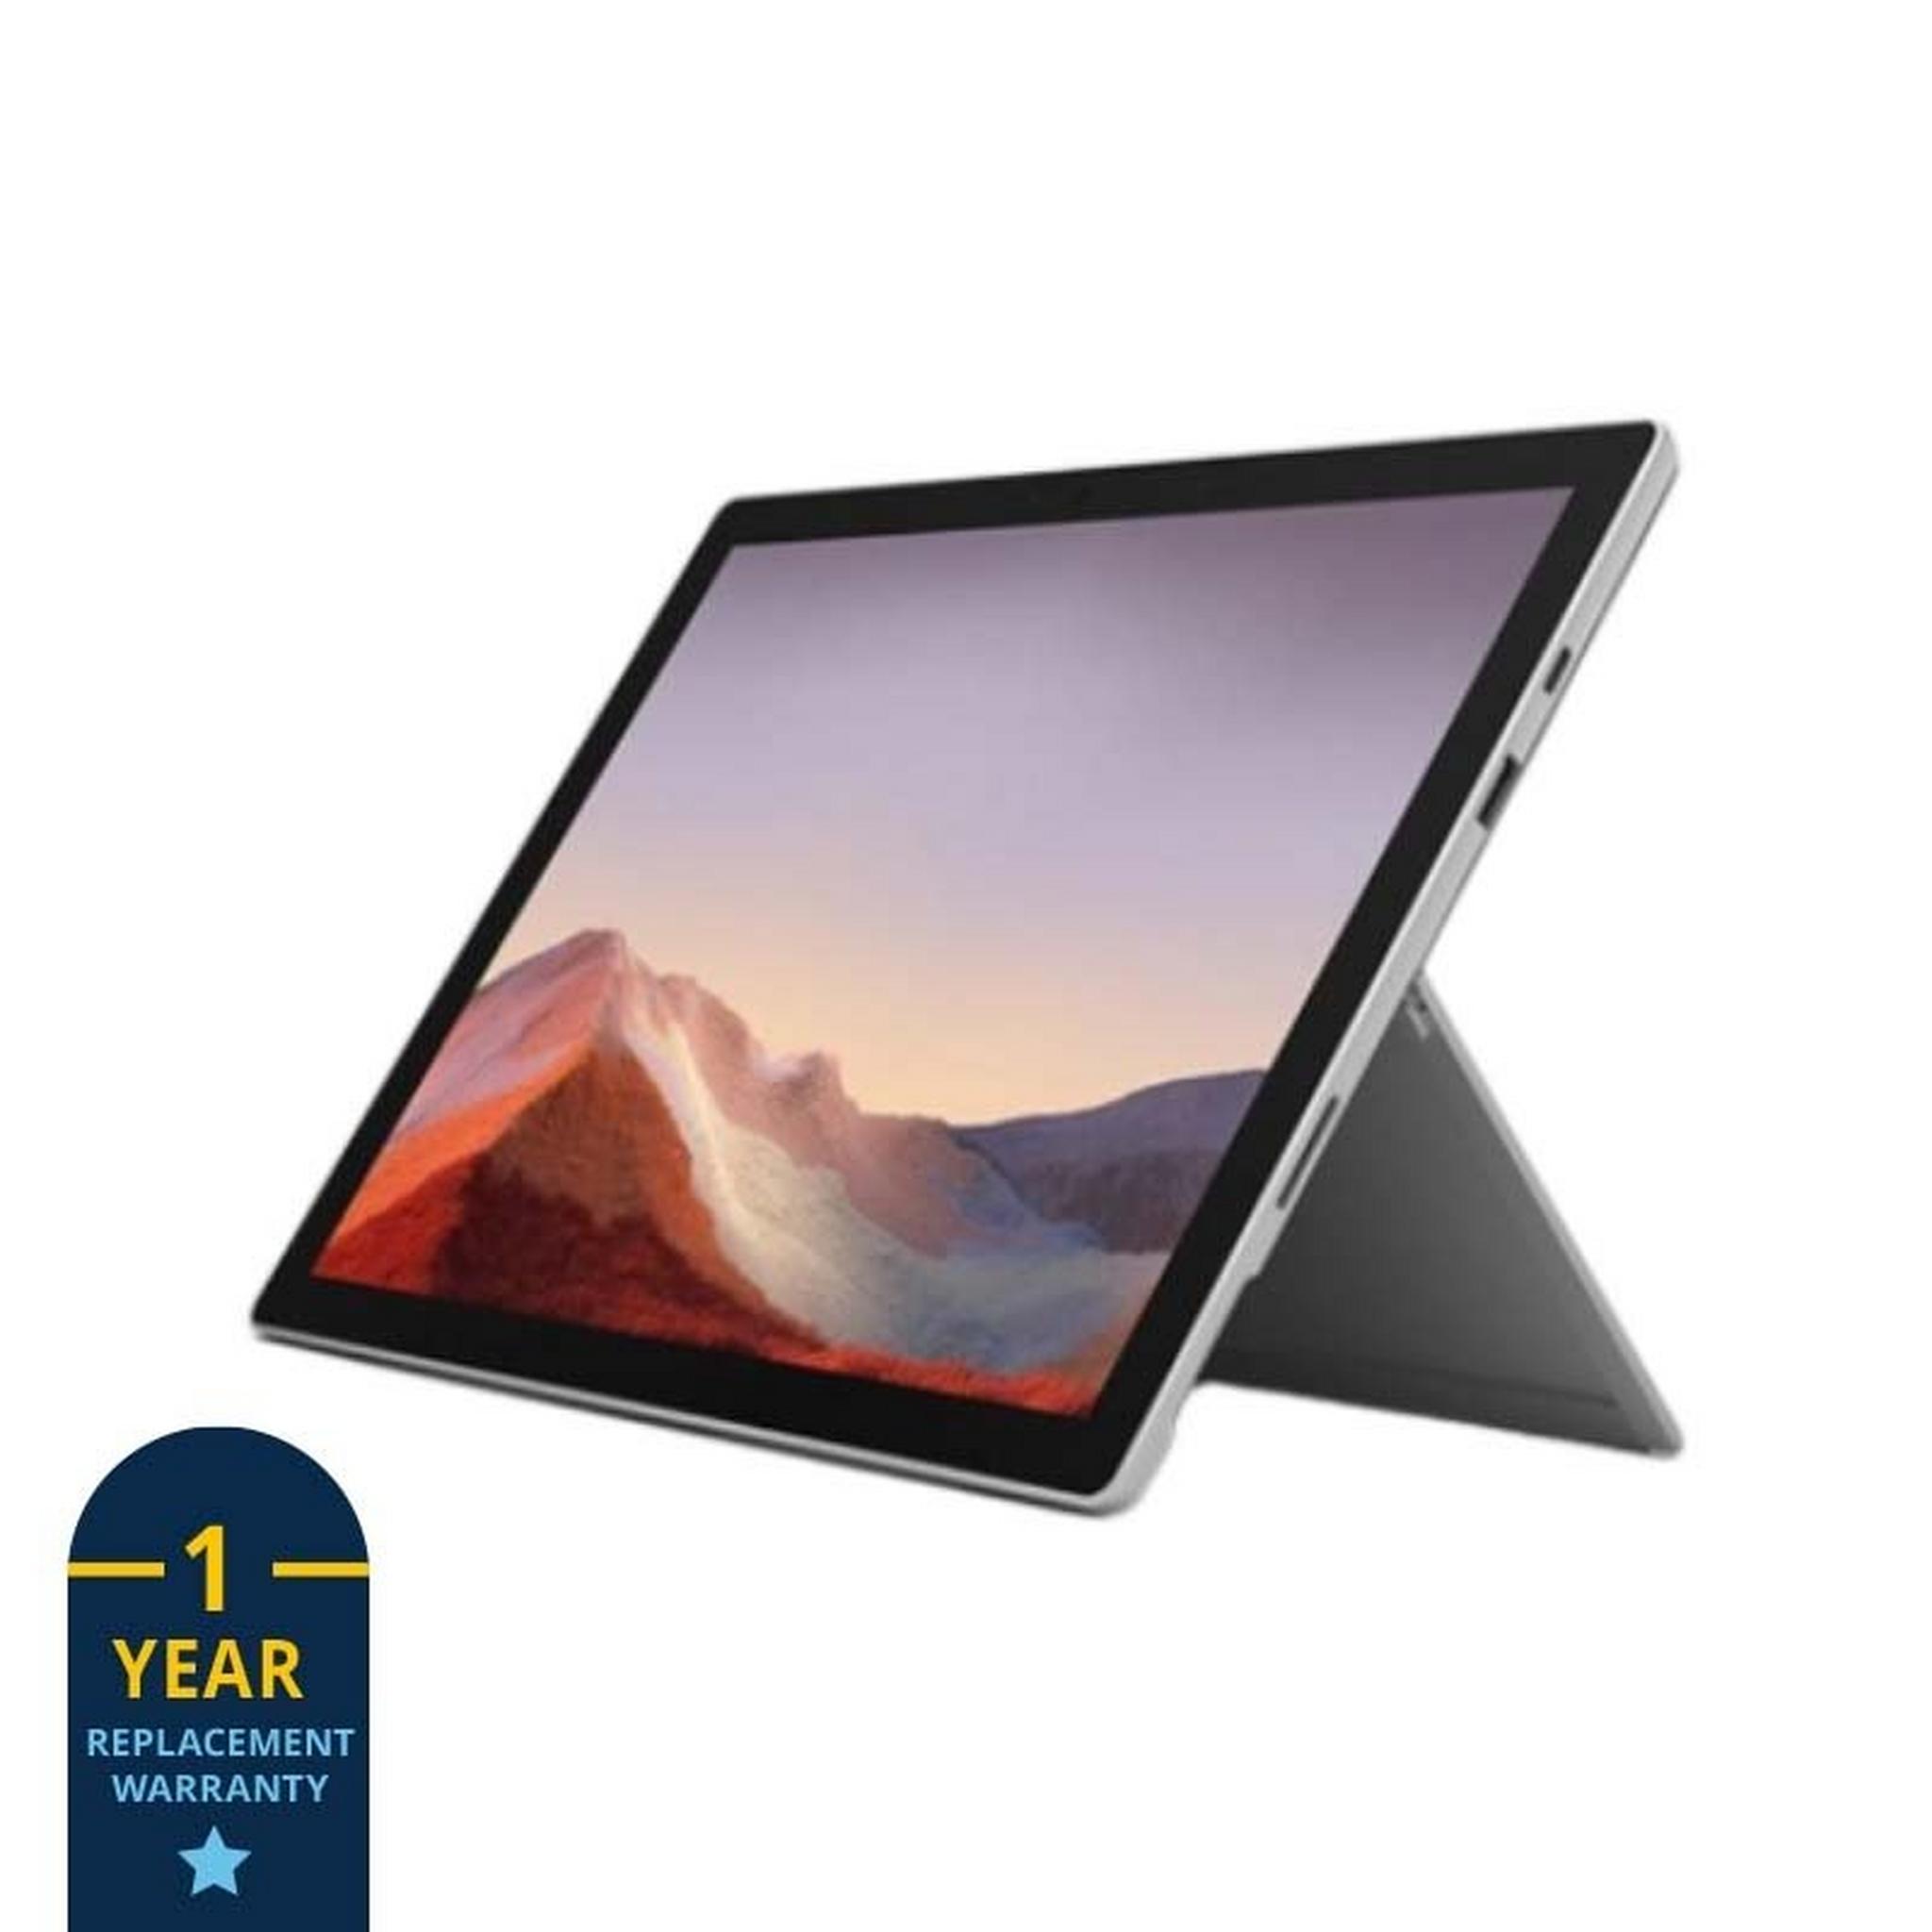 Microsoft Surface Pro 7 Core i5 Ram 8GB SSD 128GB 12.3-inch Touchscreen Convertible Laptop - Platinum